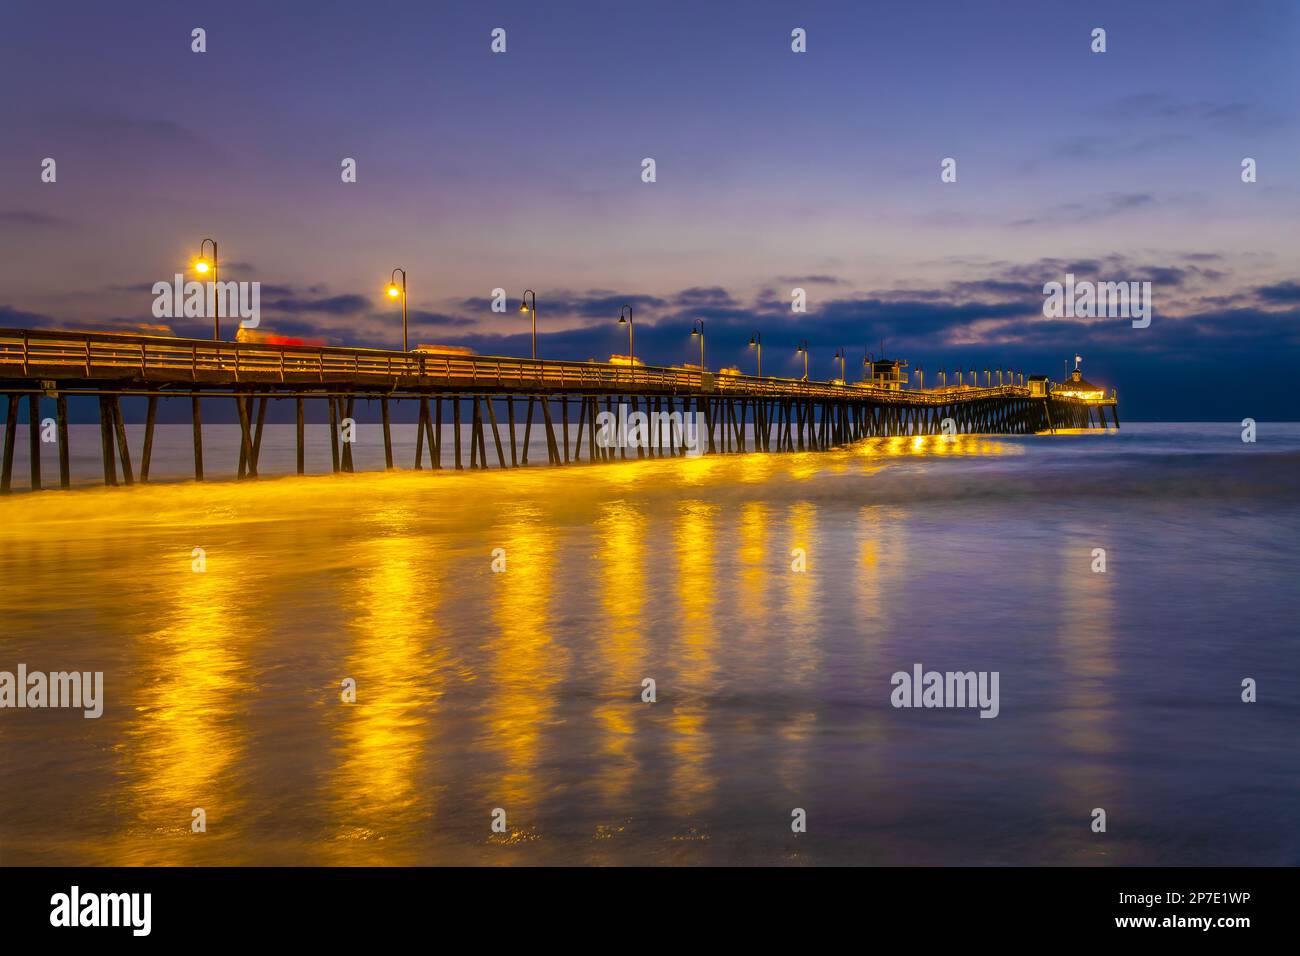 Imperial beach pier iat night in San Diego, California Stock Photo